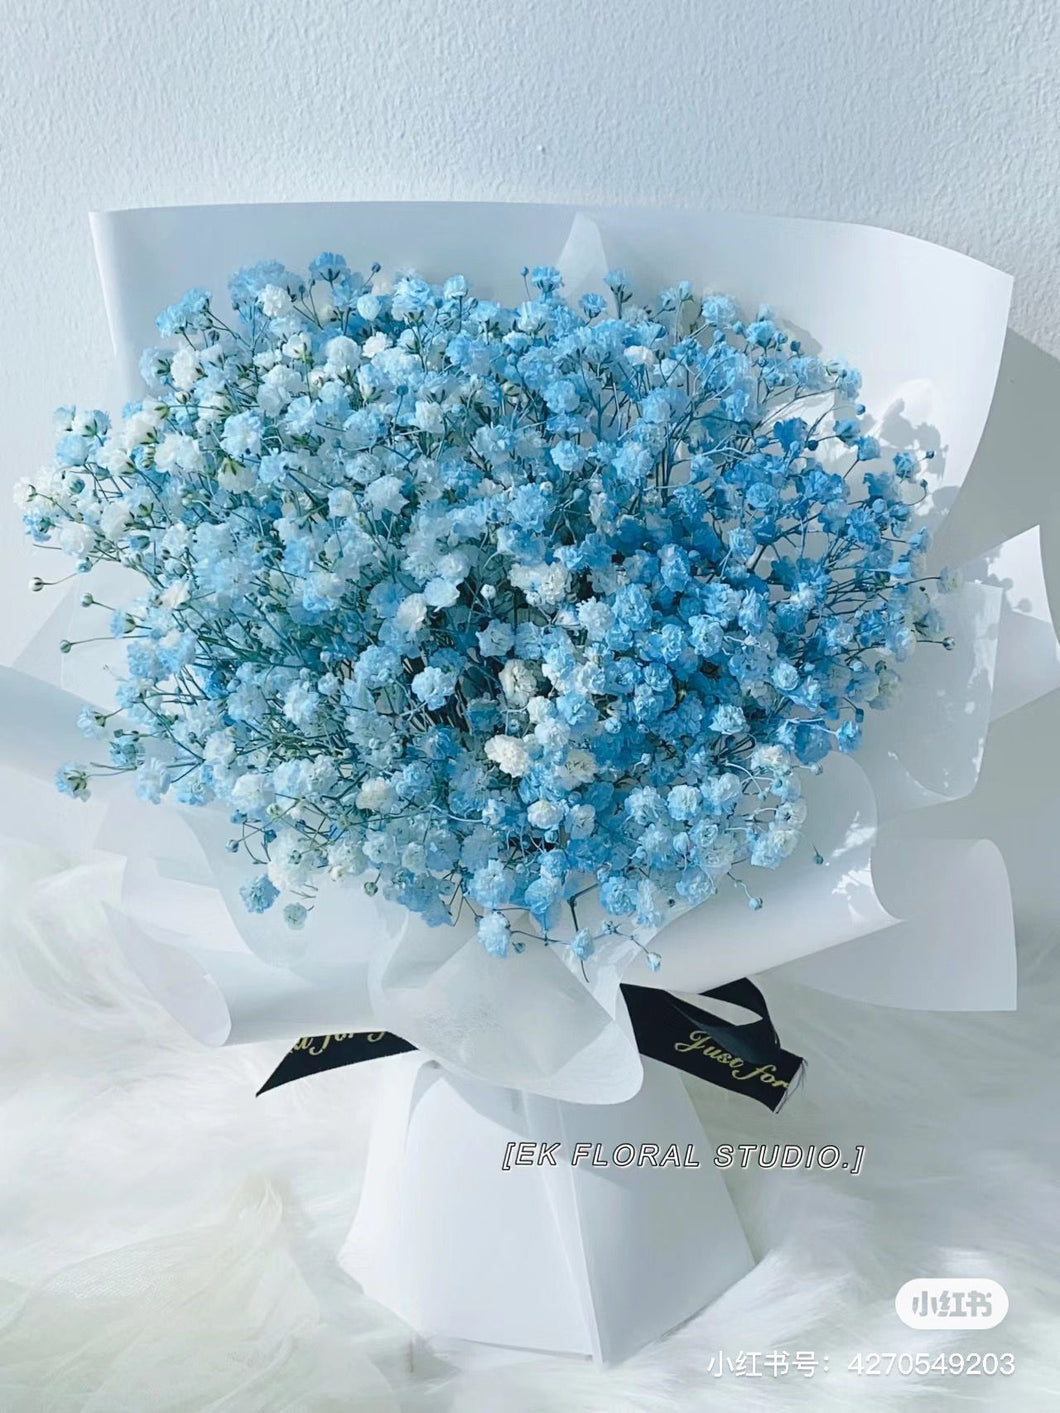 Blue Baby Breath Bouquet